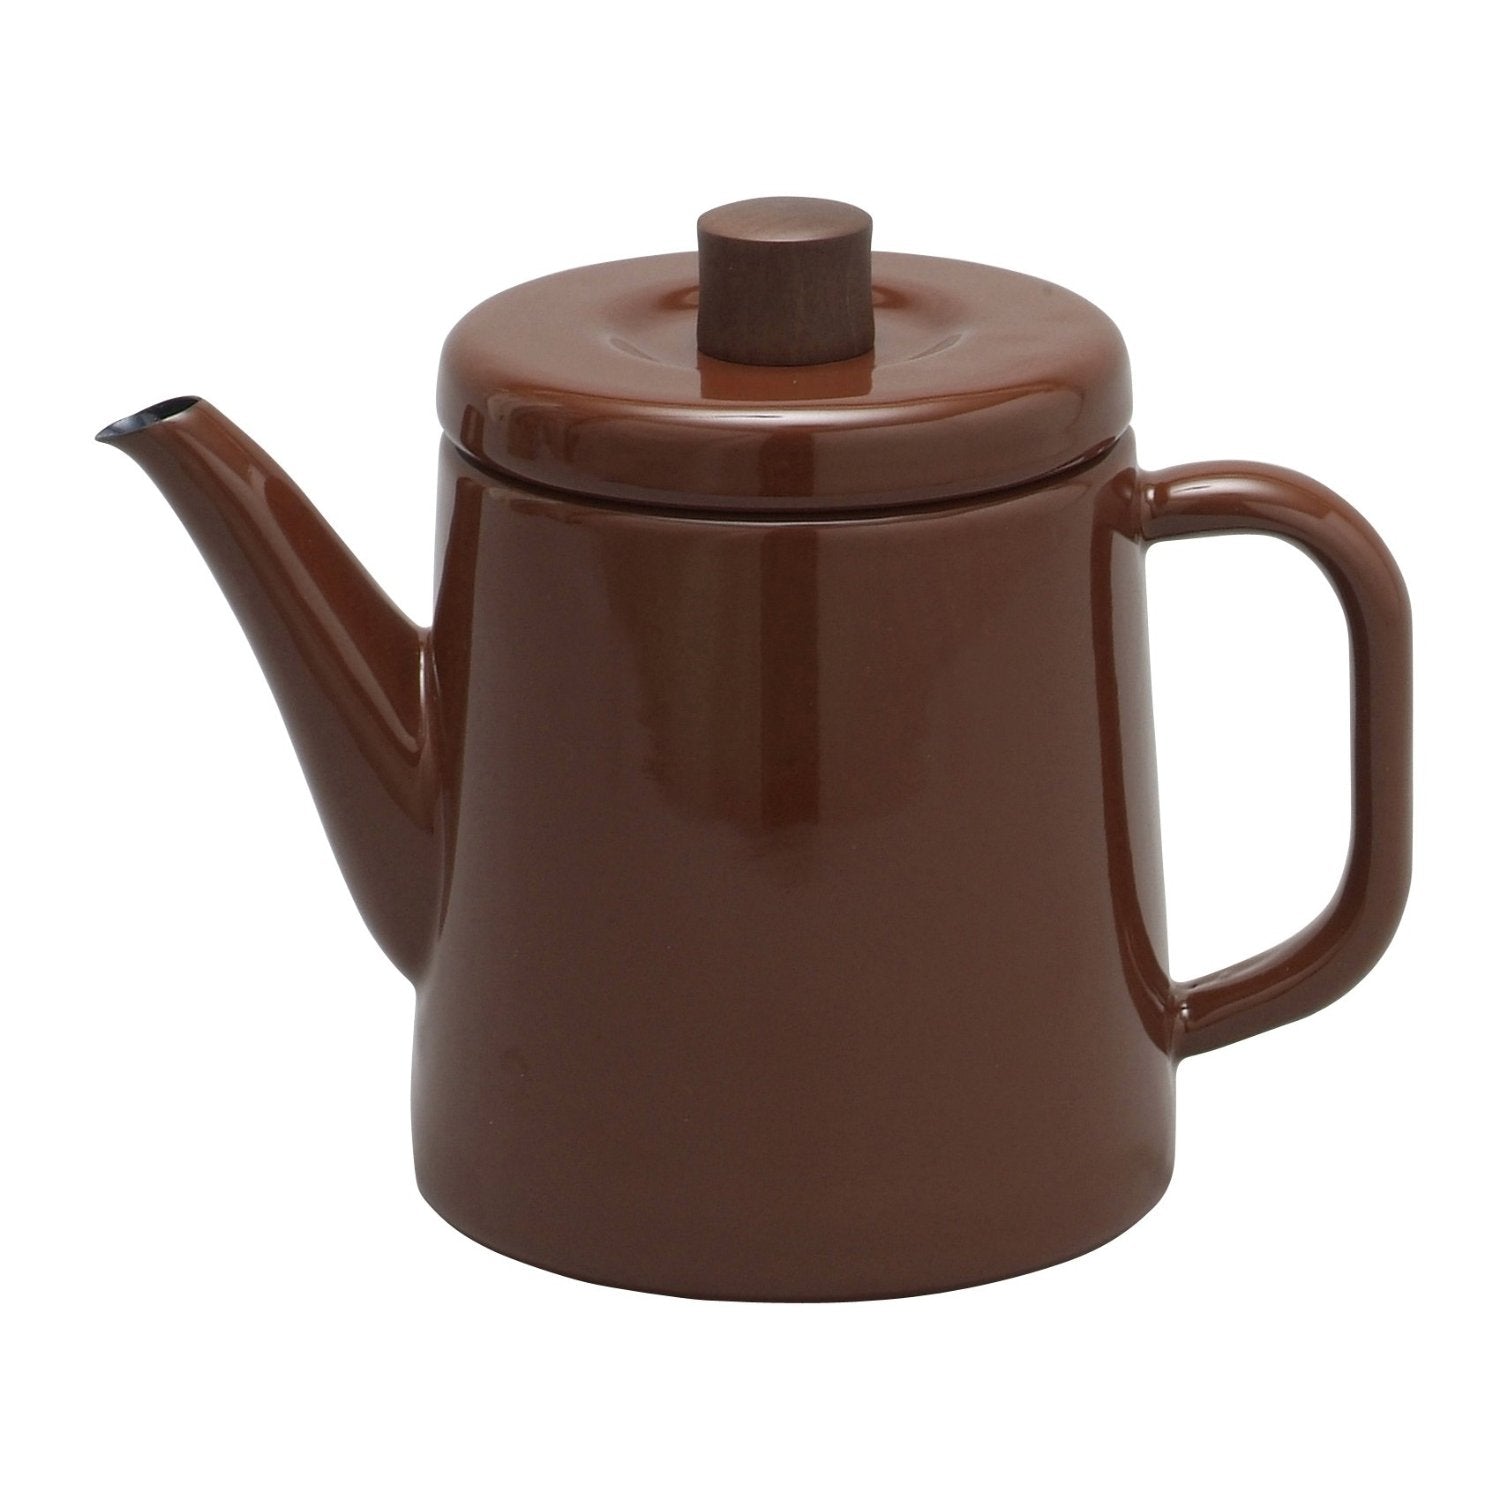 Enamel Teapot / Kettle (Brown)